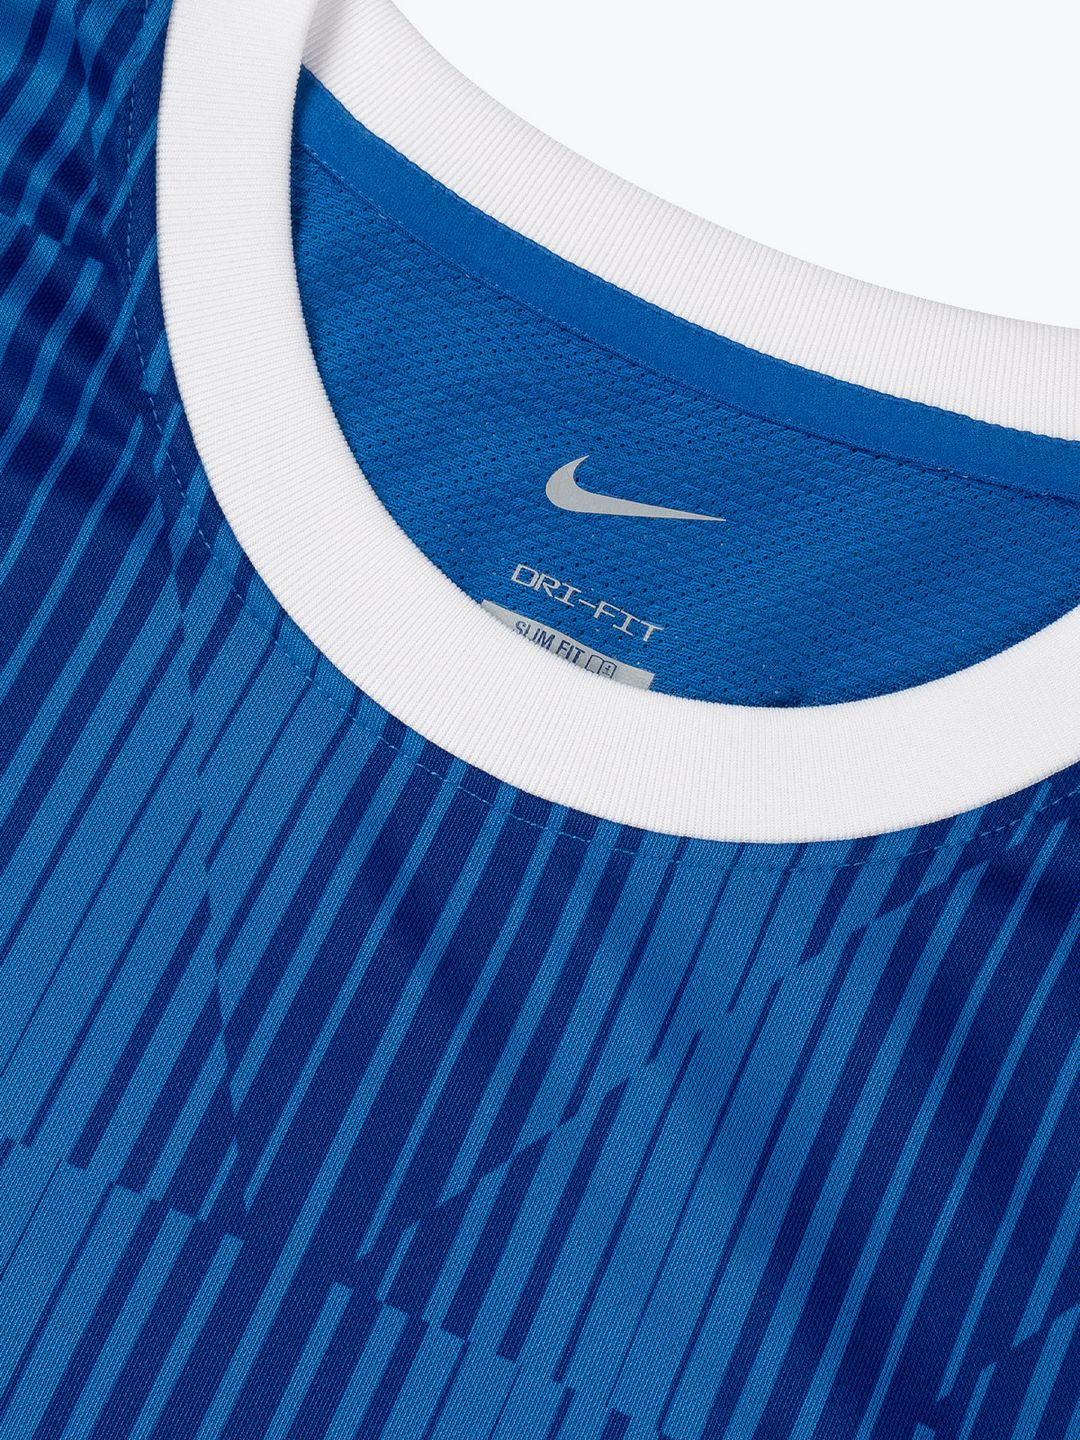 Portsmouth 2023-24 Nike Home Kit - Football Shirt Culture - Latest ...